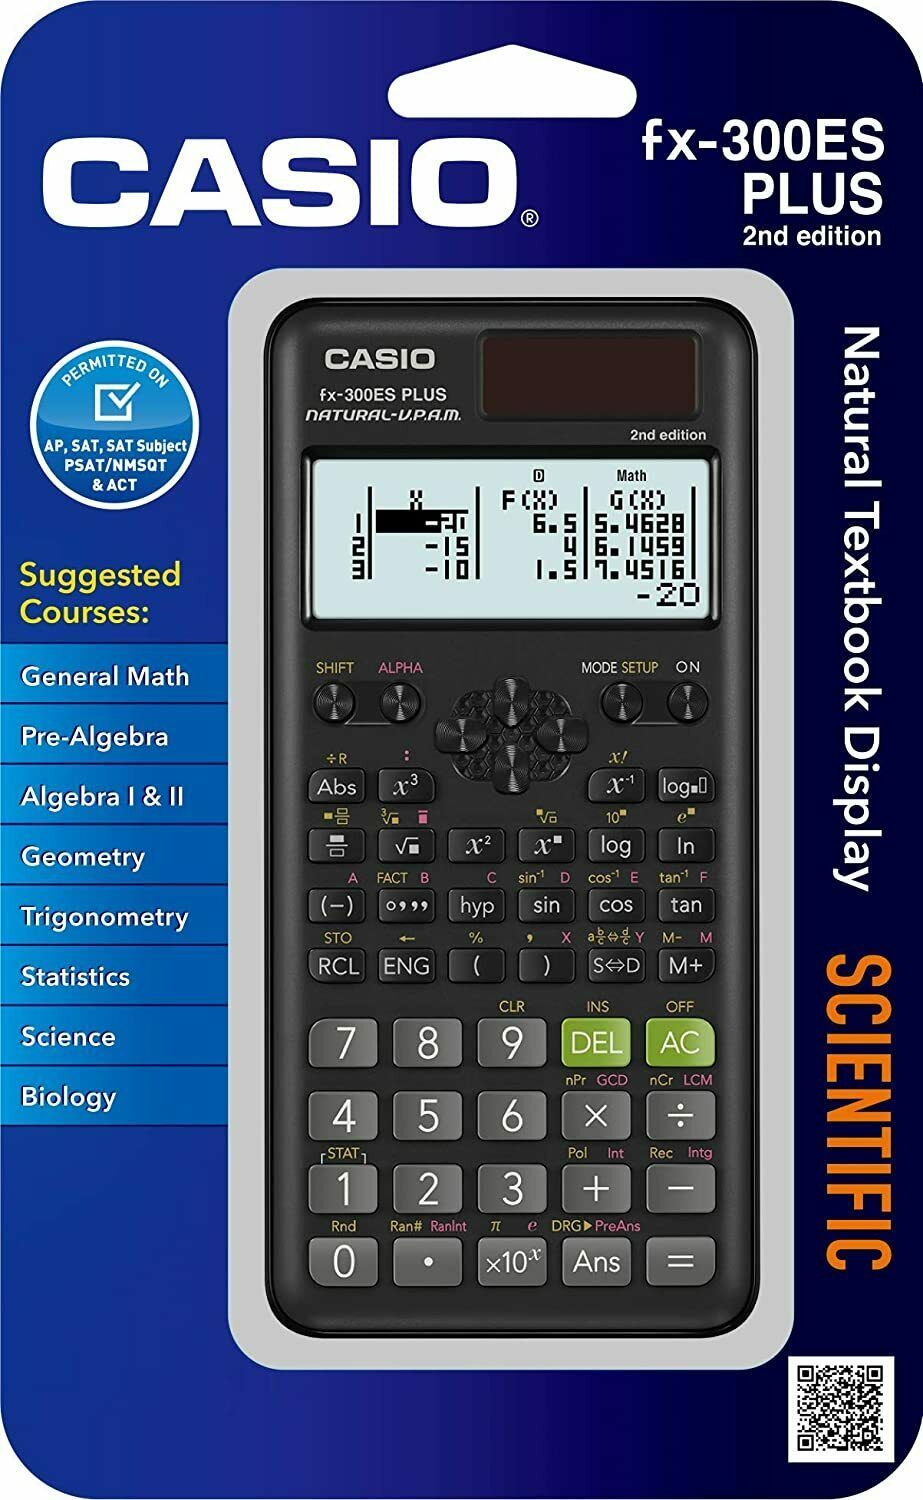 Primary image for Casio - FX-300ESPLUS2 - 2nd Edition, Standard Scientific Calculator - Black